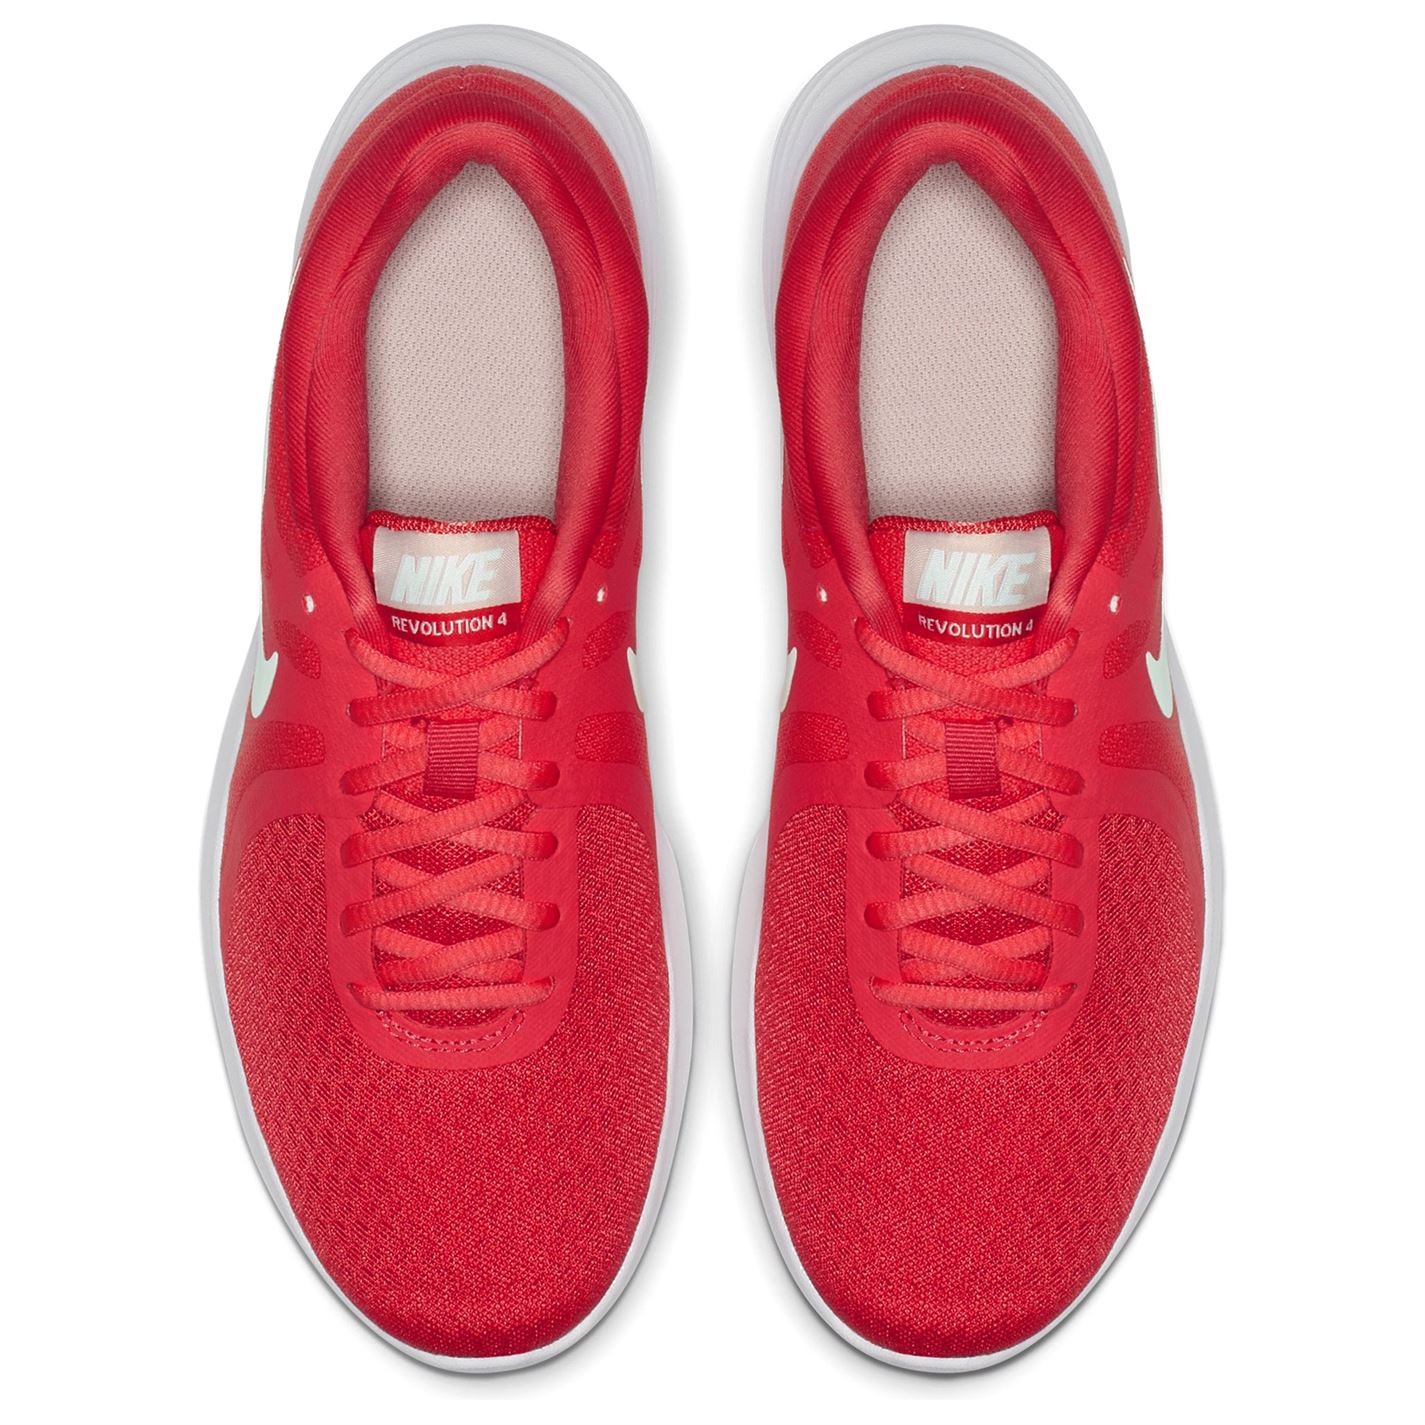 Adidasi Sport Nike Revolution 4 pentru Femei